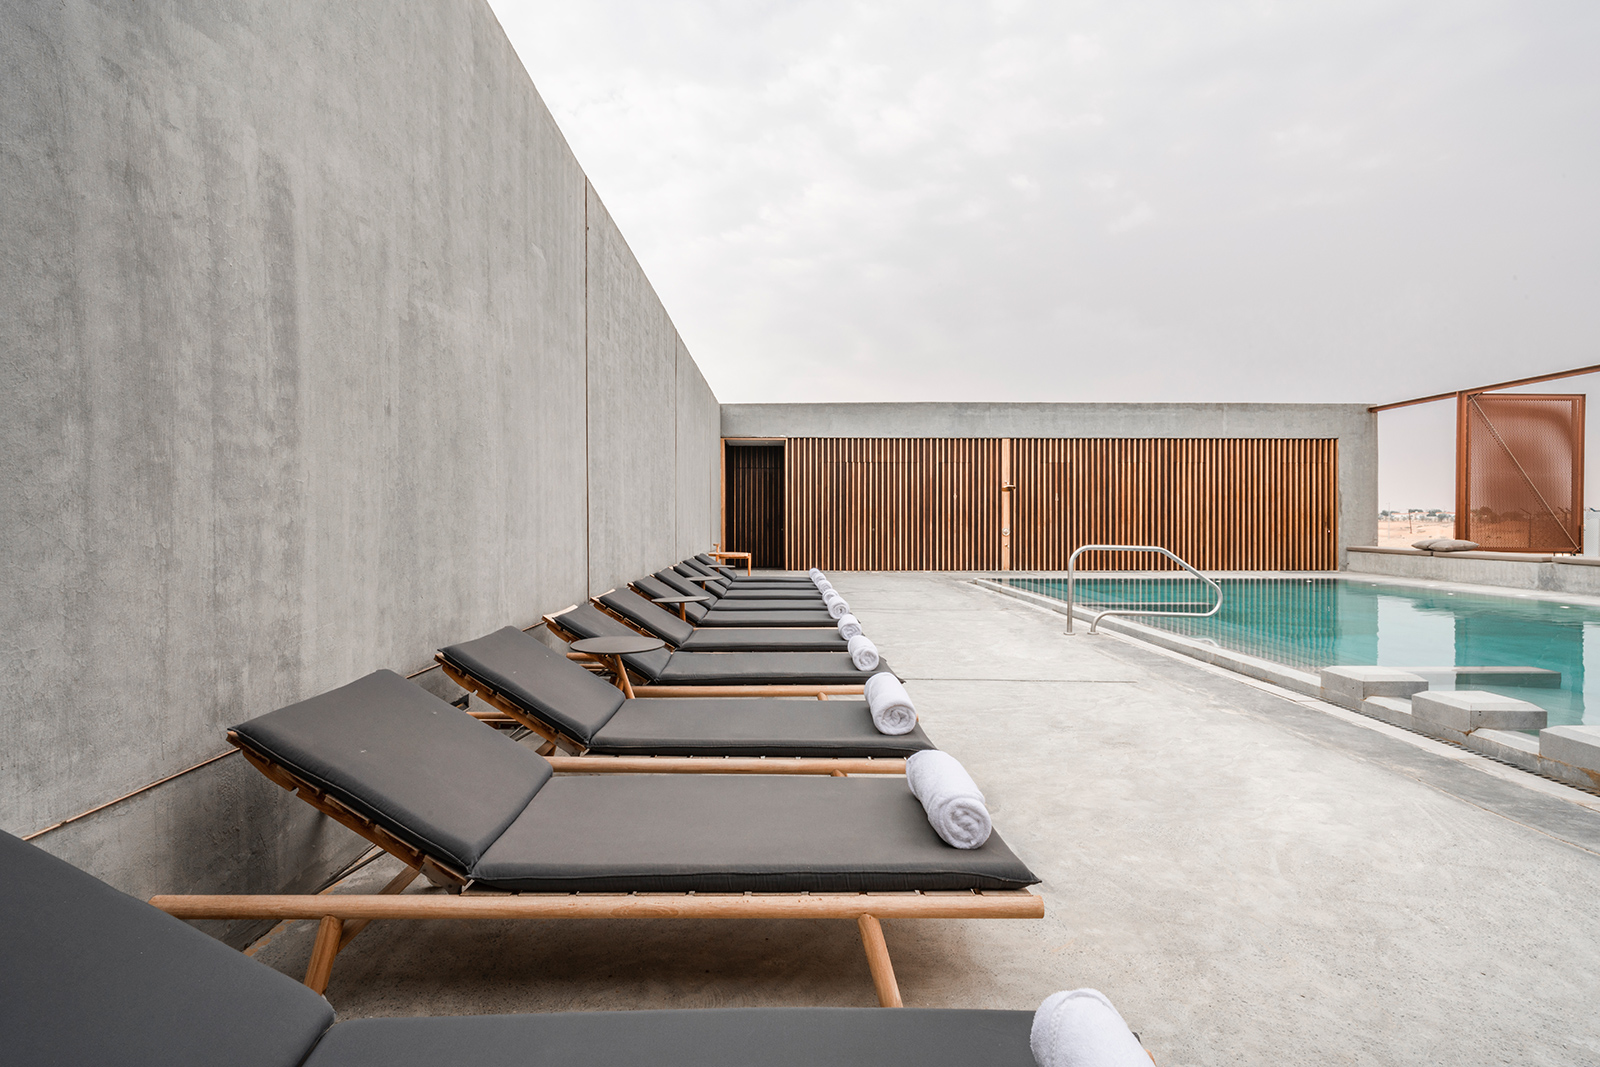 The concrete swimming pool and area at Al Faya Lodge, UAE